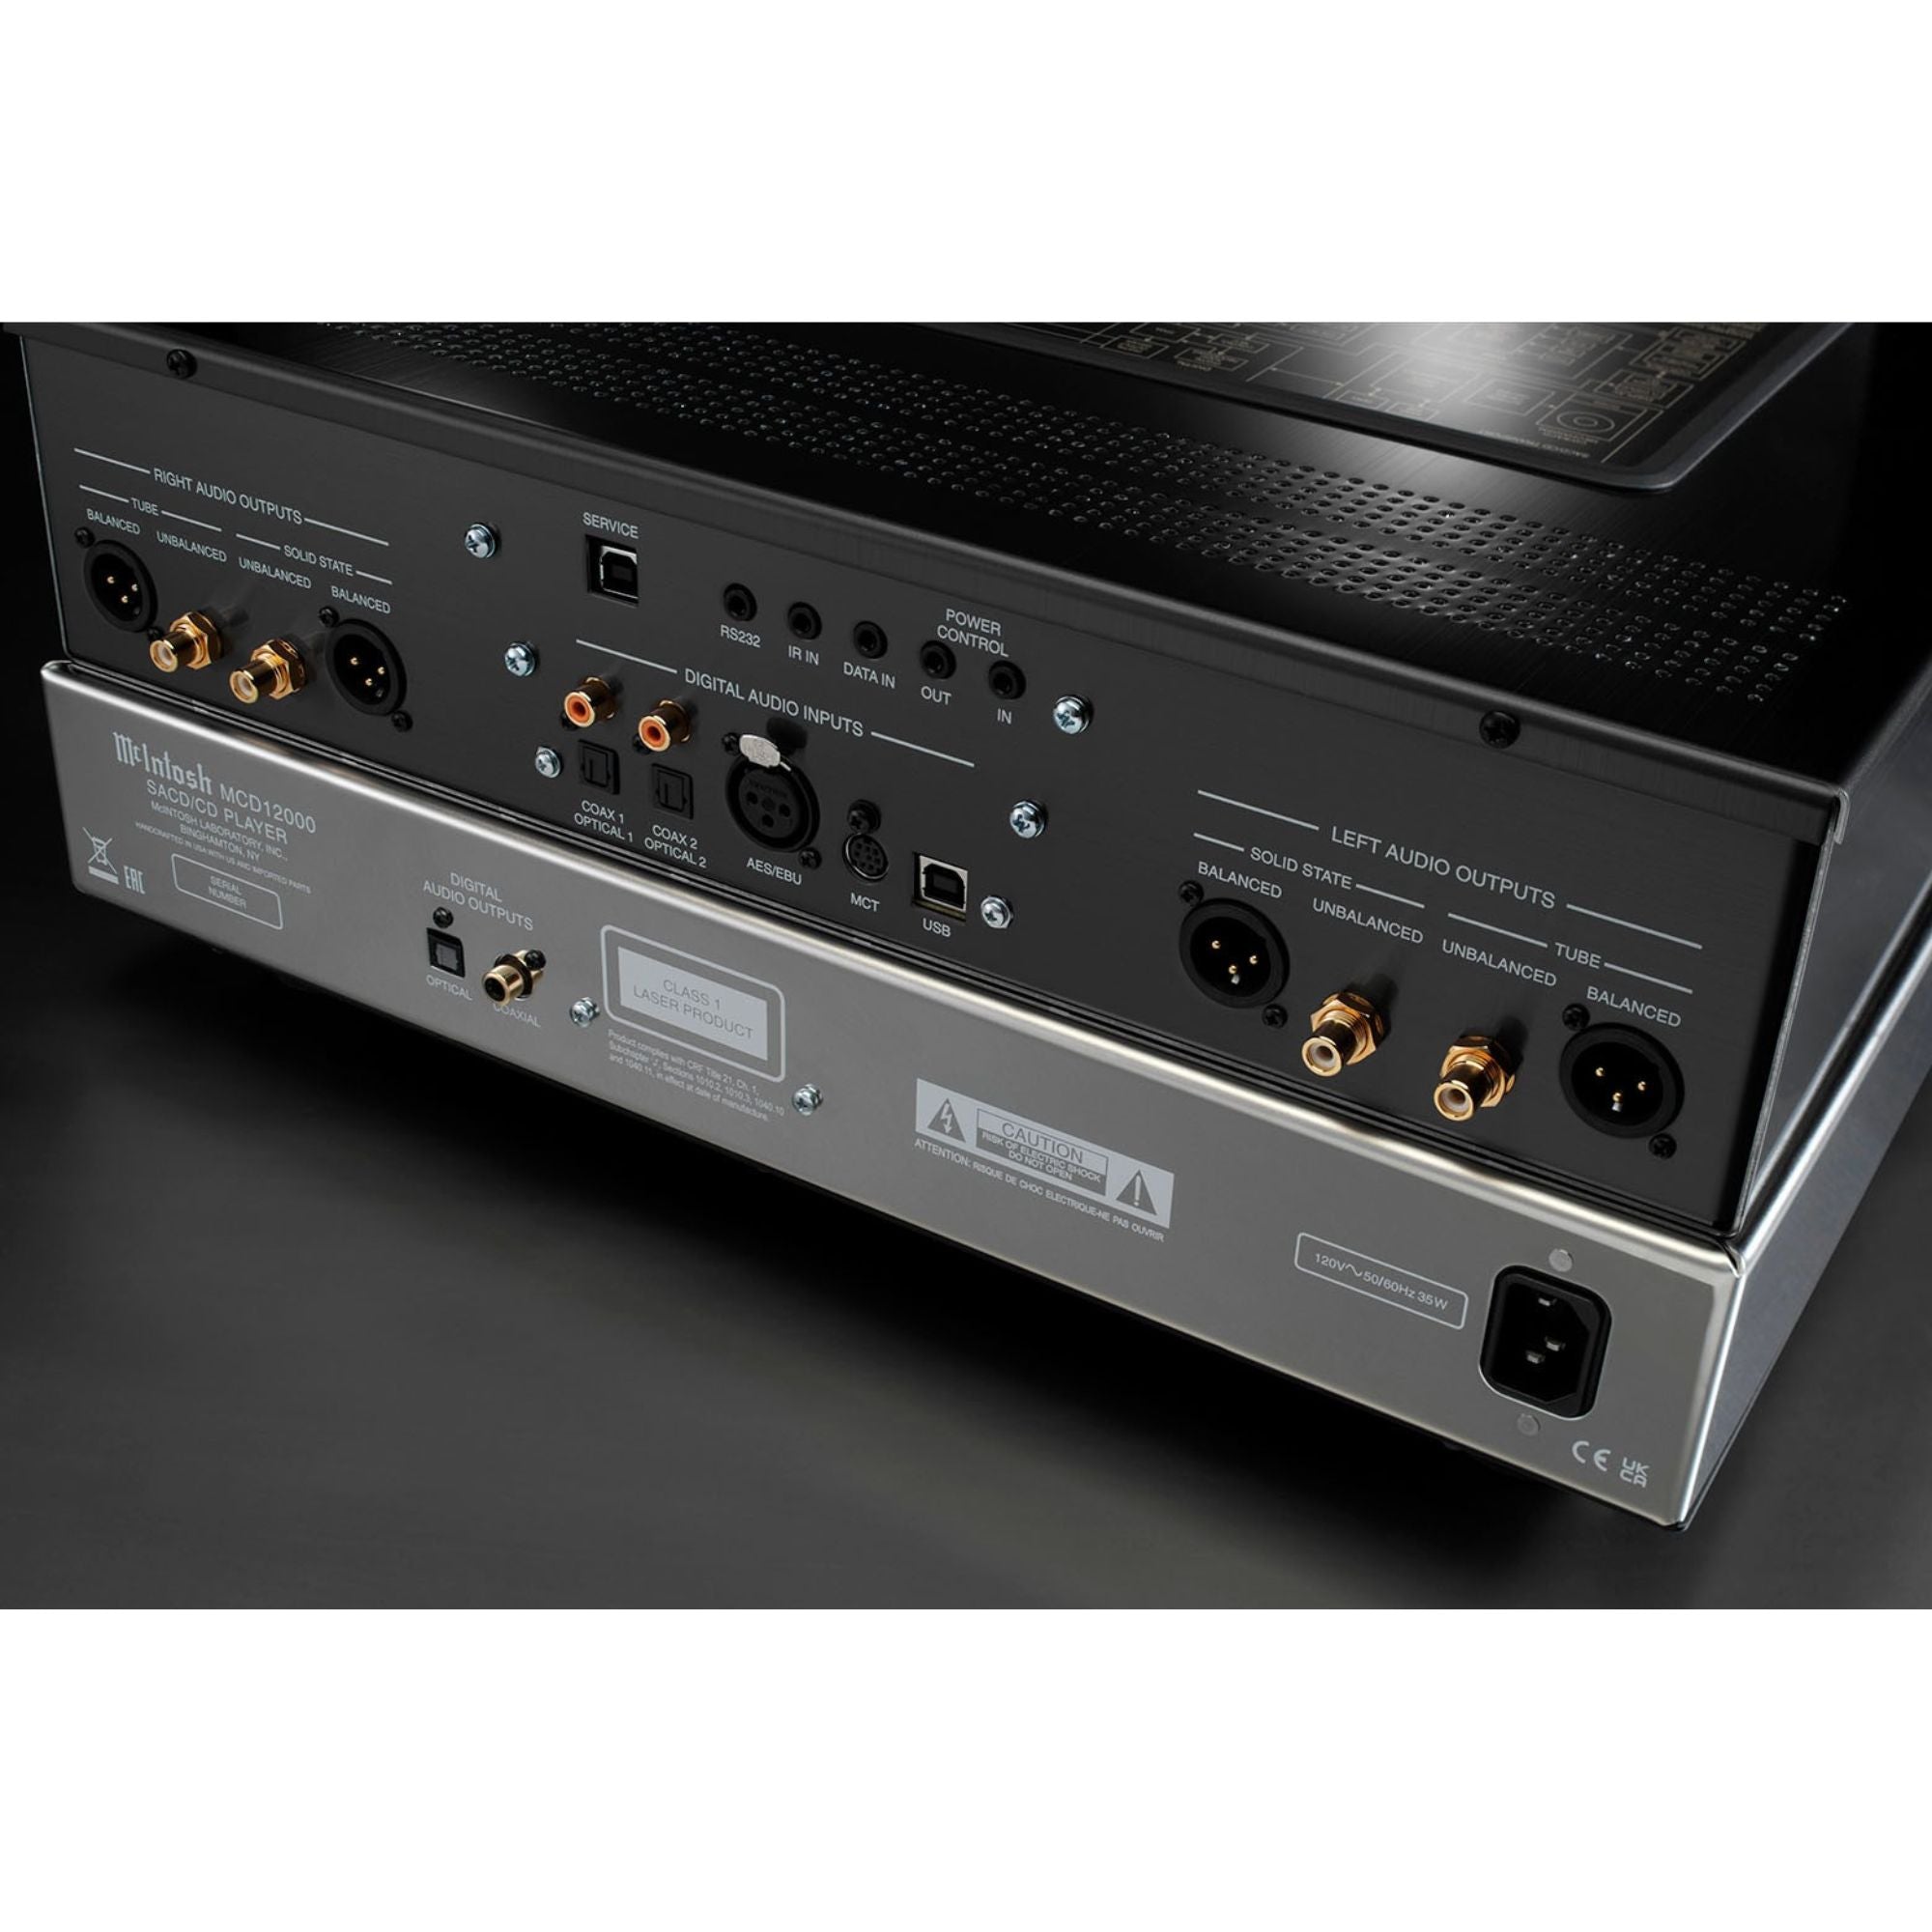 McIntosh Labs MCD12000 - 2 Channel SACD/CD Player - AVStore